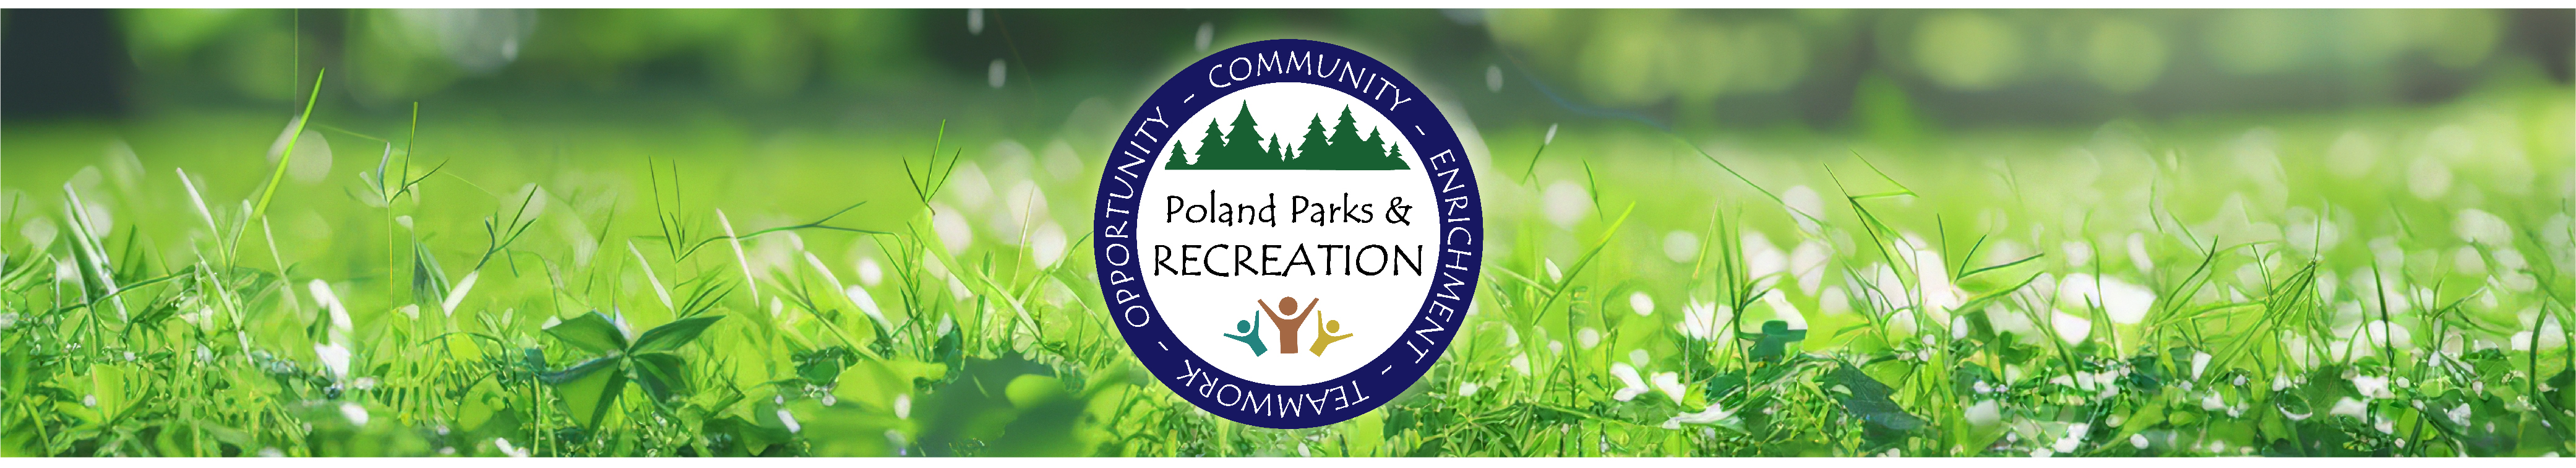 Poland Parks & Recreation